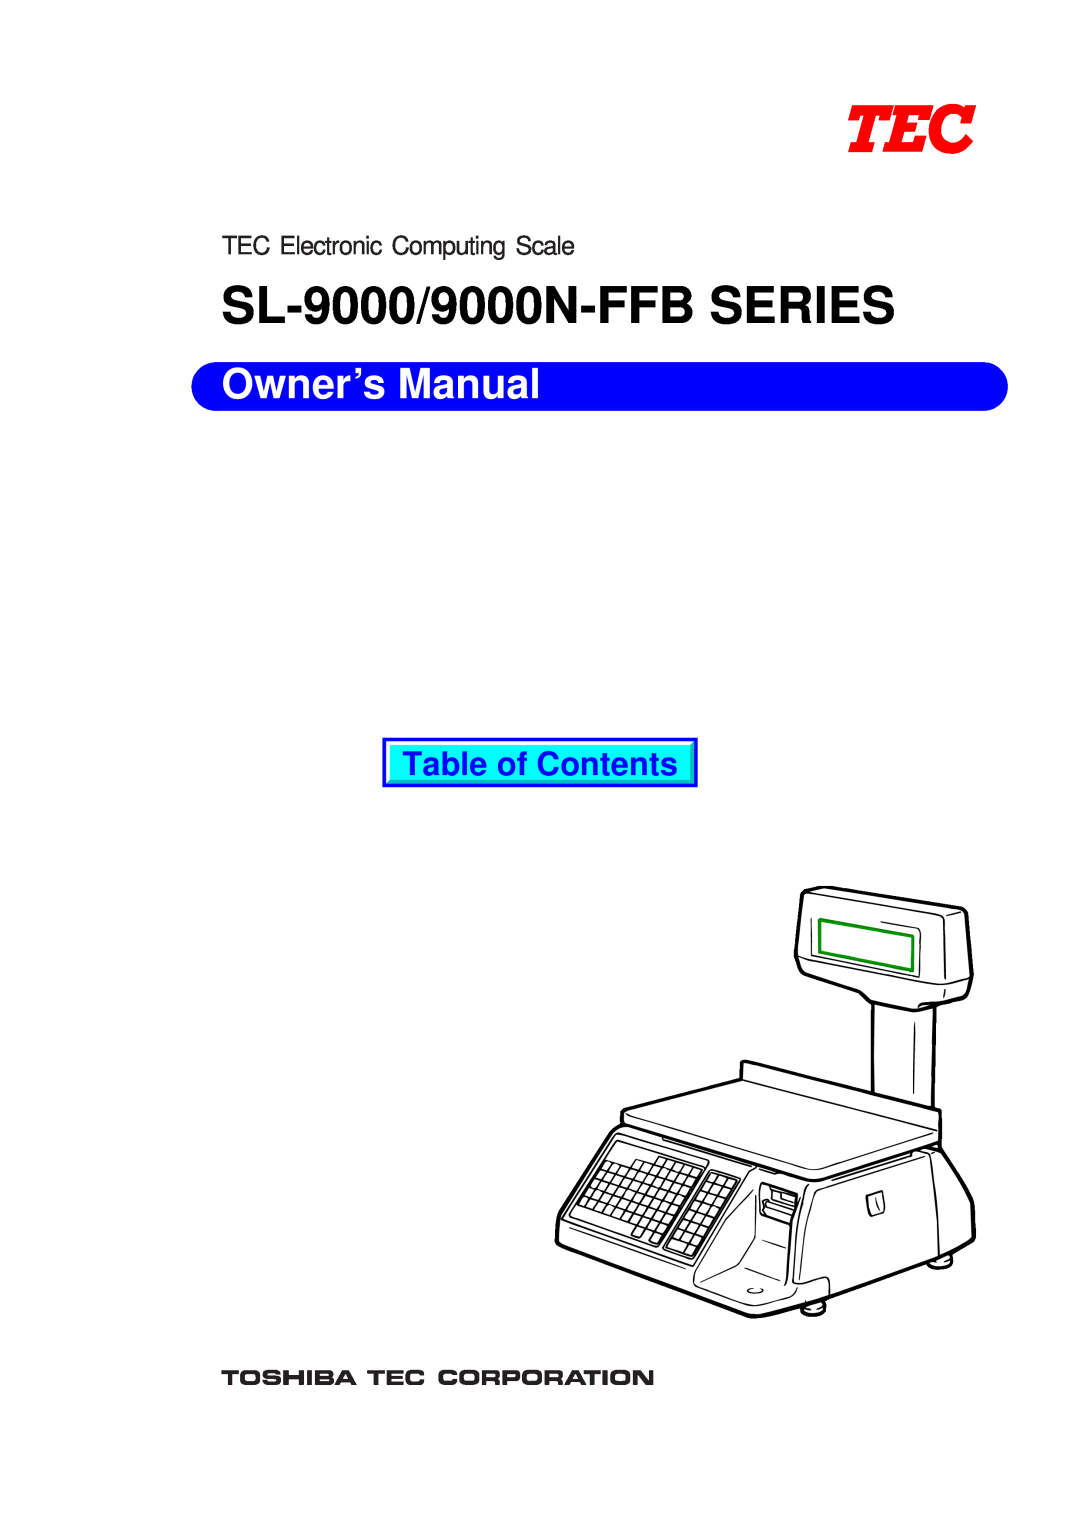 Toshiba SL-9000-FFB, SL-9000N-FFB, EM1-31064JE owner manual SL-9000/9000N-FFB SERIES, Owner’s Manual, Table of Contents 